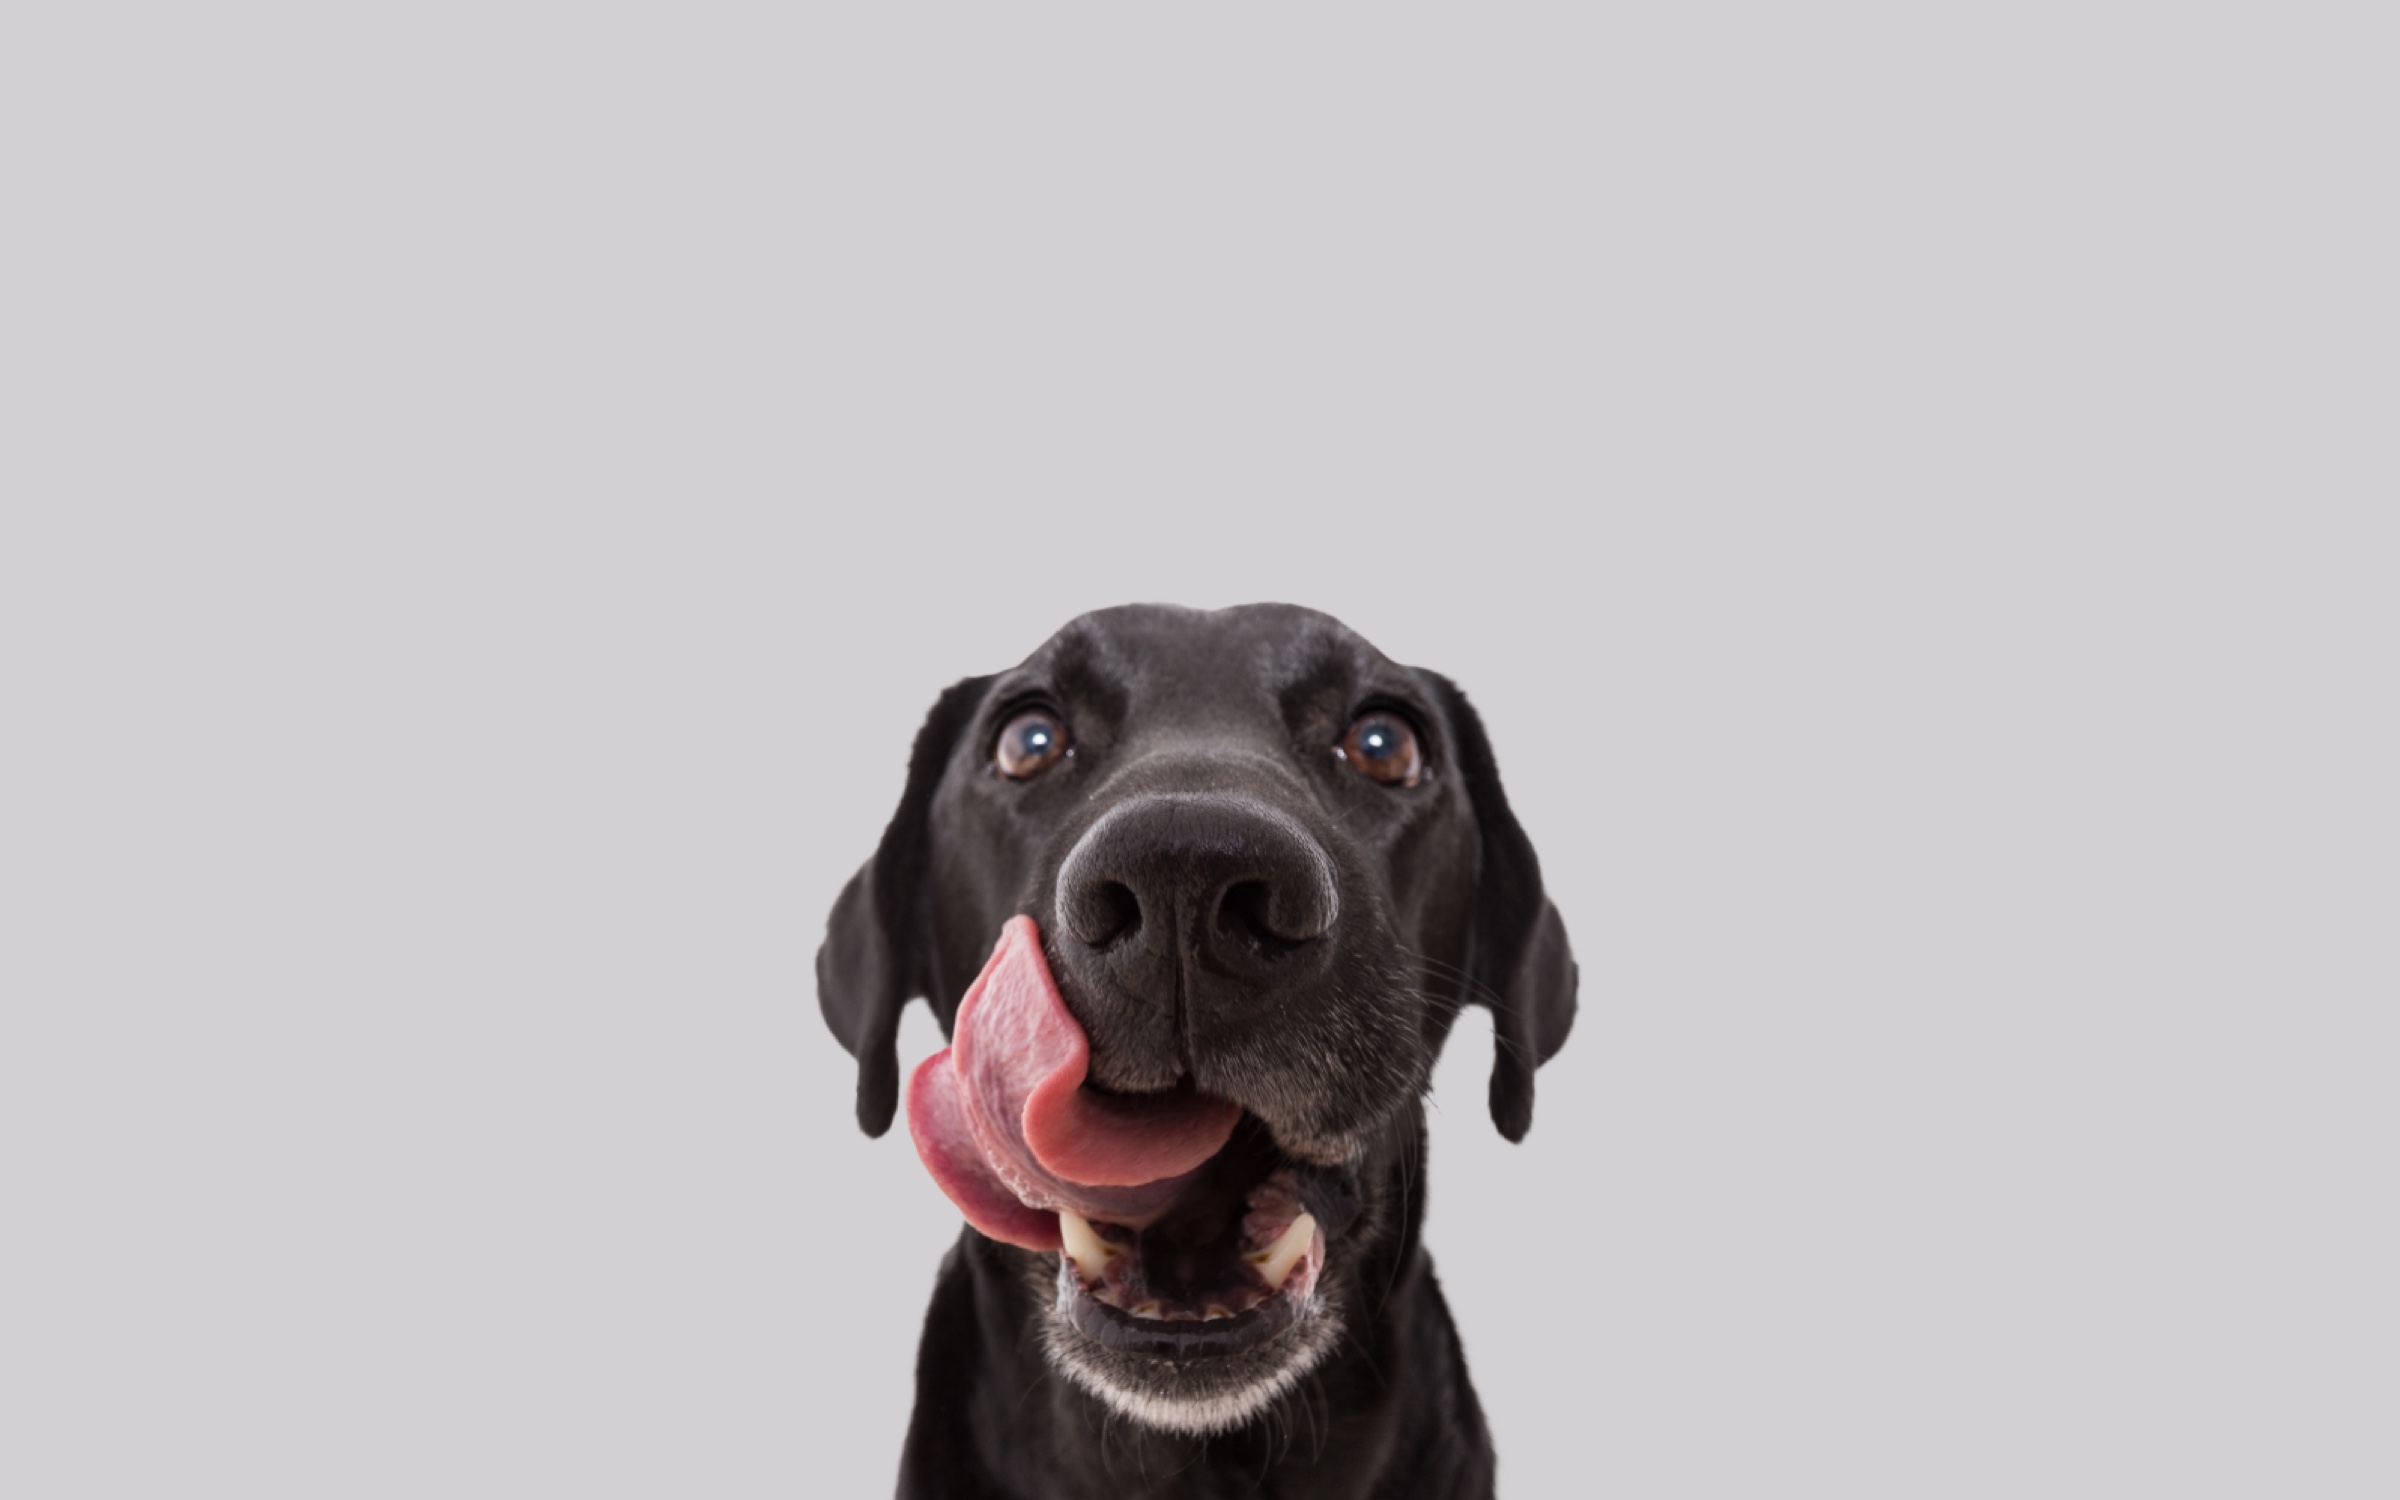 Black dog licking its face.